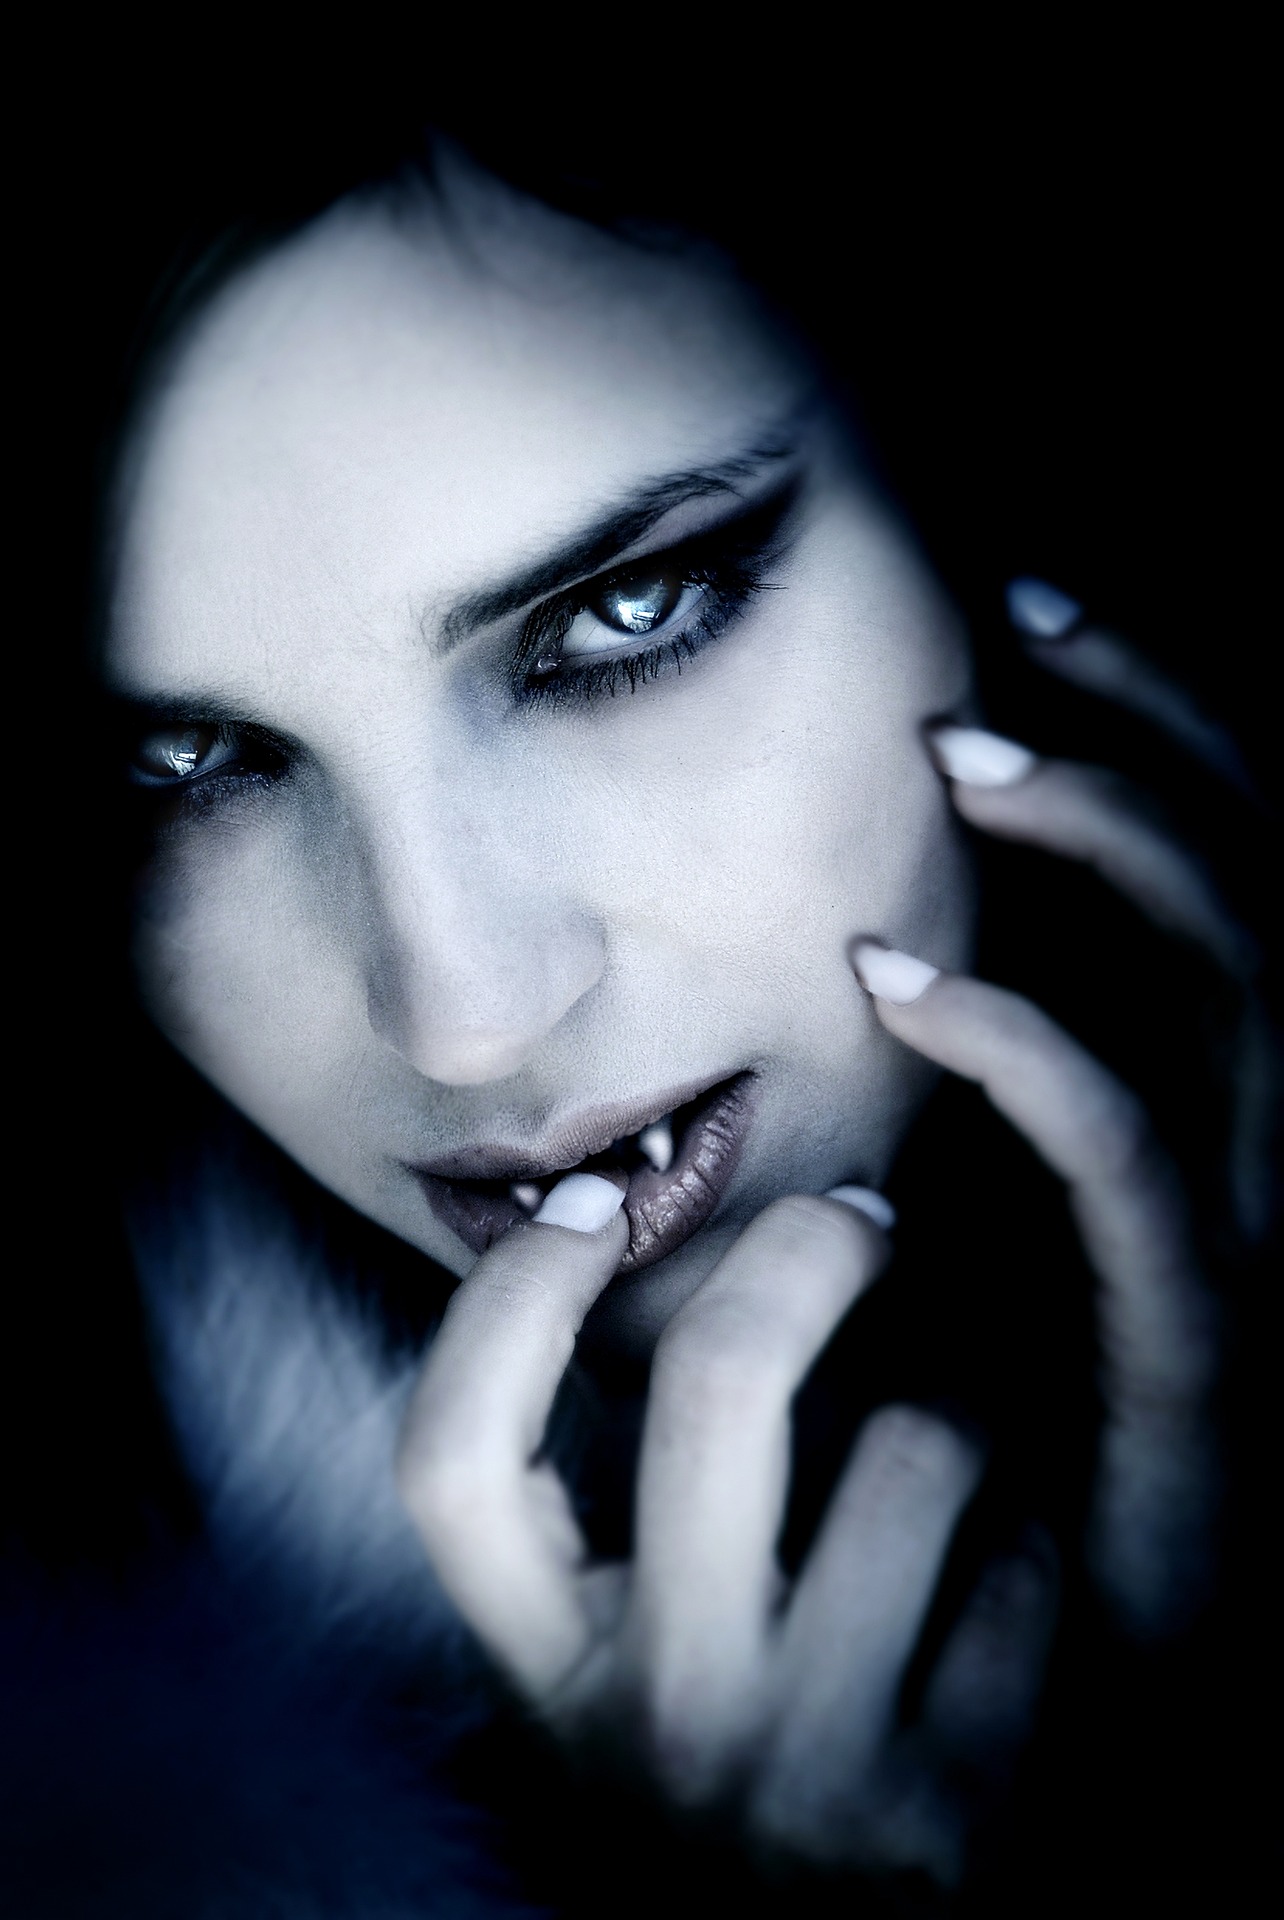 Liz BlackX’ One Spooky Genre: Vampires